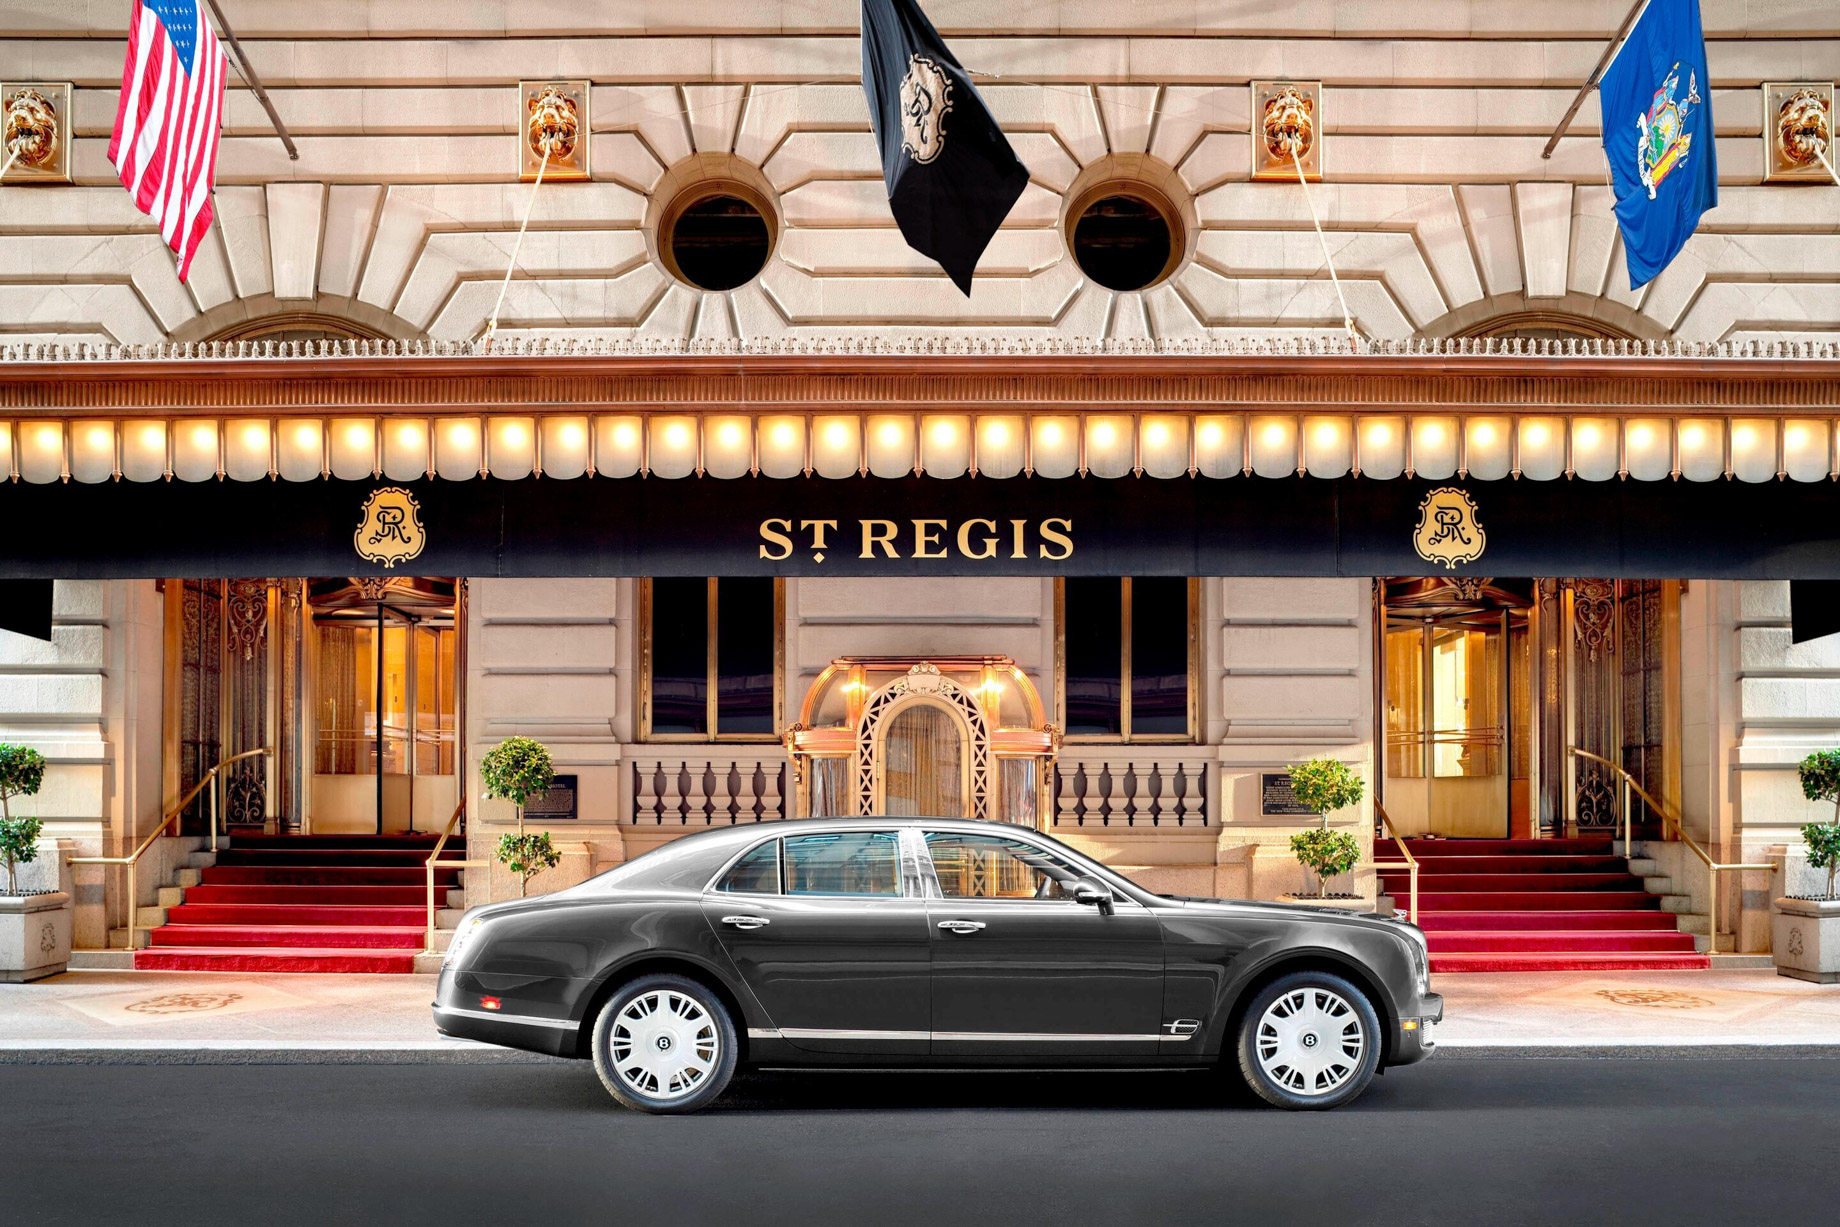 The St. Regis New York Hotel - New York, NY, USA